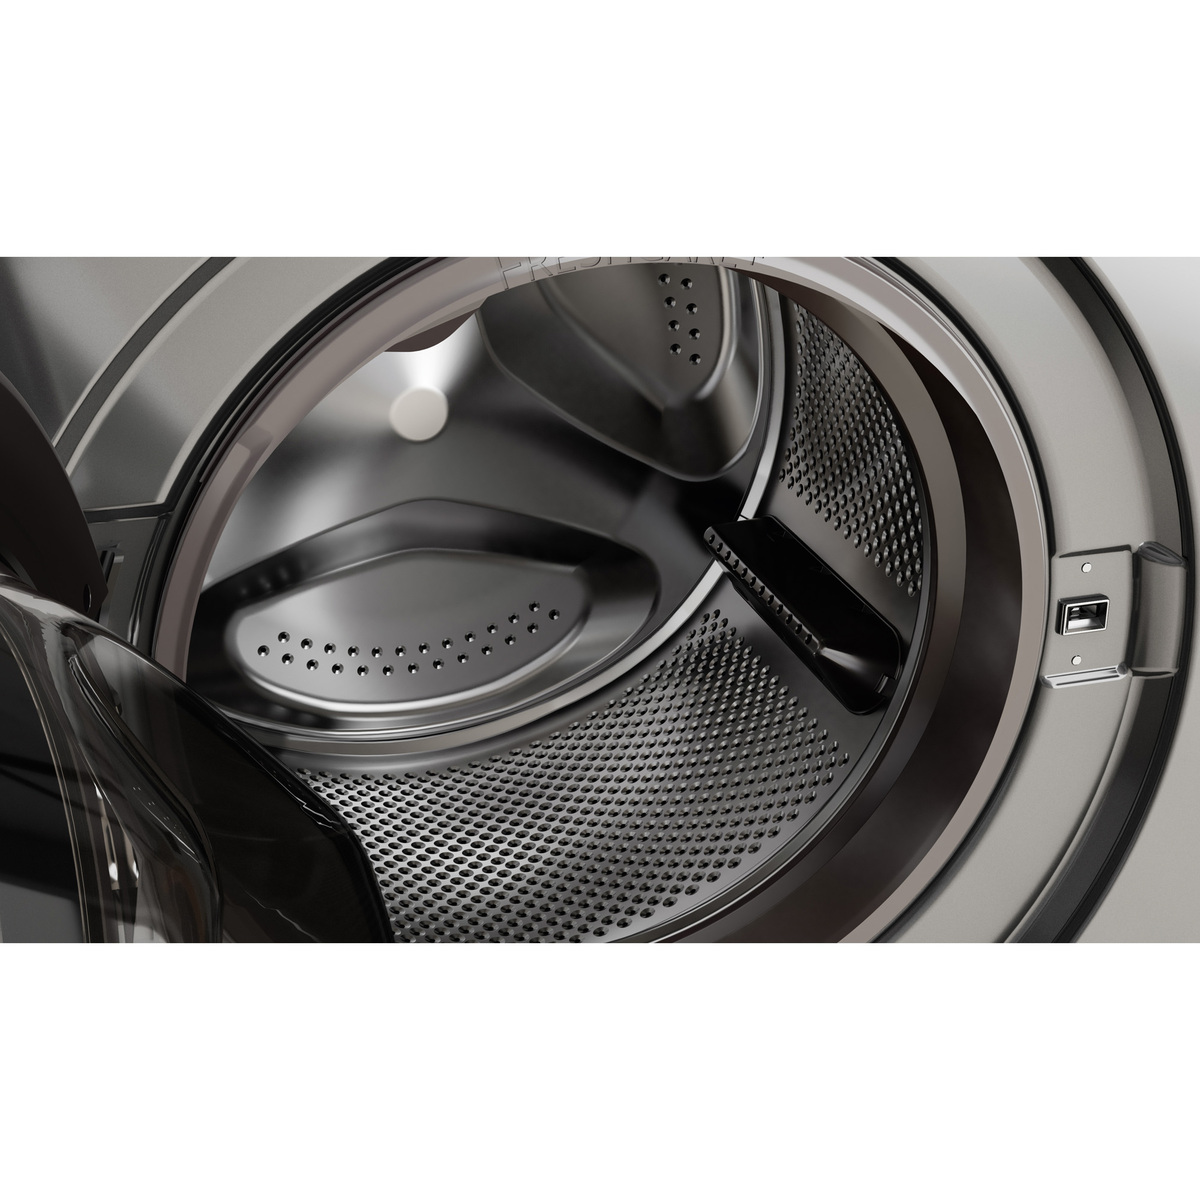 Whirlpool Freestanding Front Load Washing Machine 10 kg, 1400 rpm, Silver, FFD10449SBCVGC